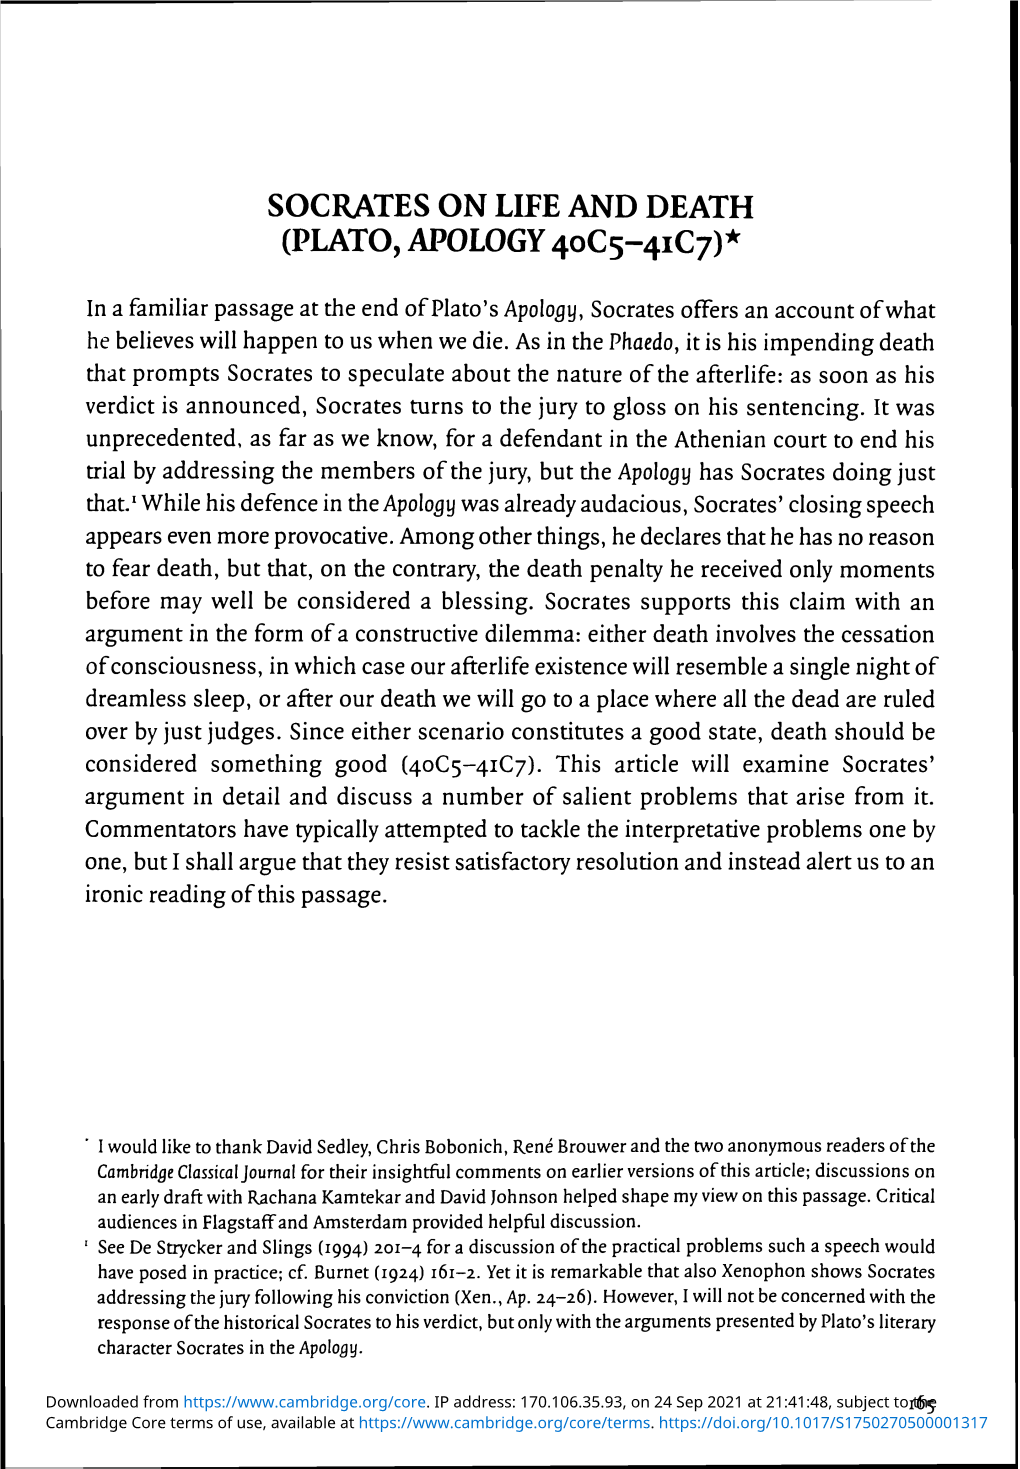 SOCRATES on LIFE and DEATH (PLATO, APOLOGY 40Cg-Q1c7)*